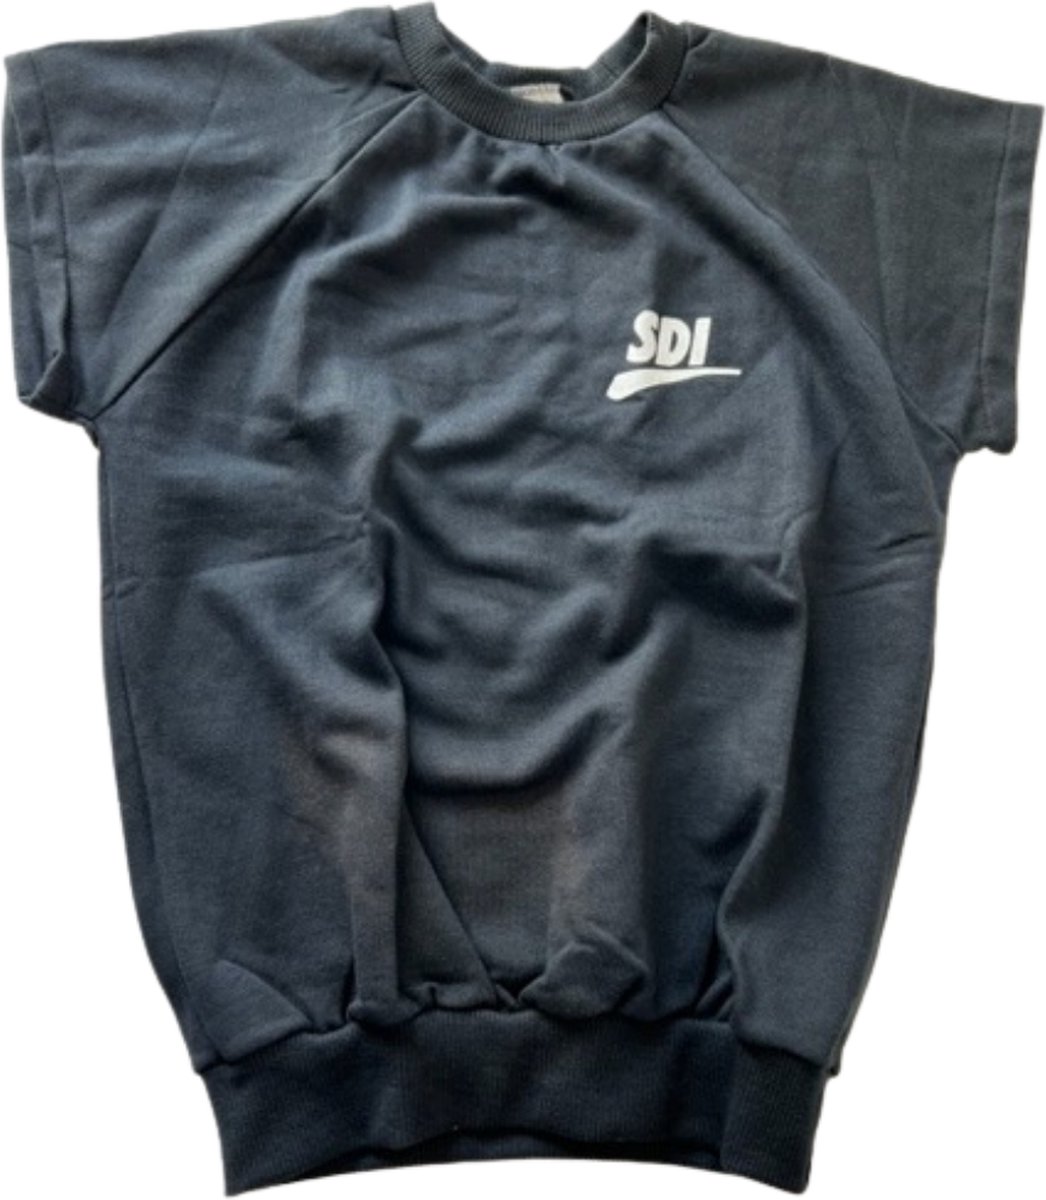 SDI - opwarm T-shirt - boksen - maat S - zwart